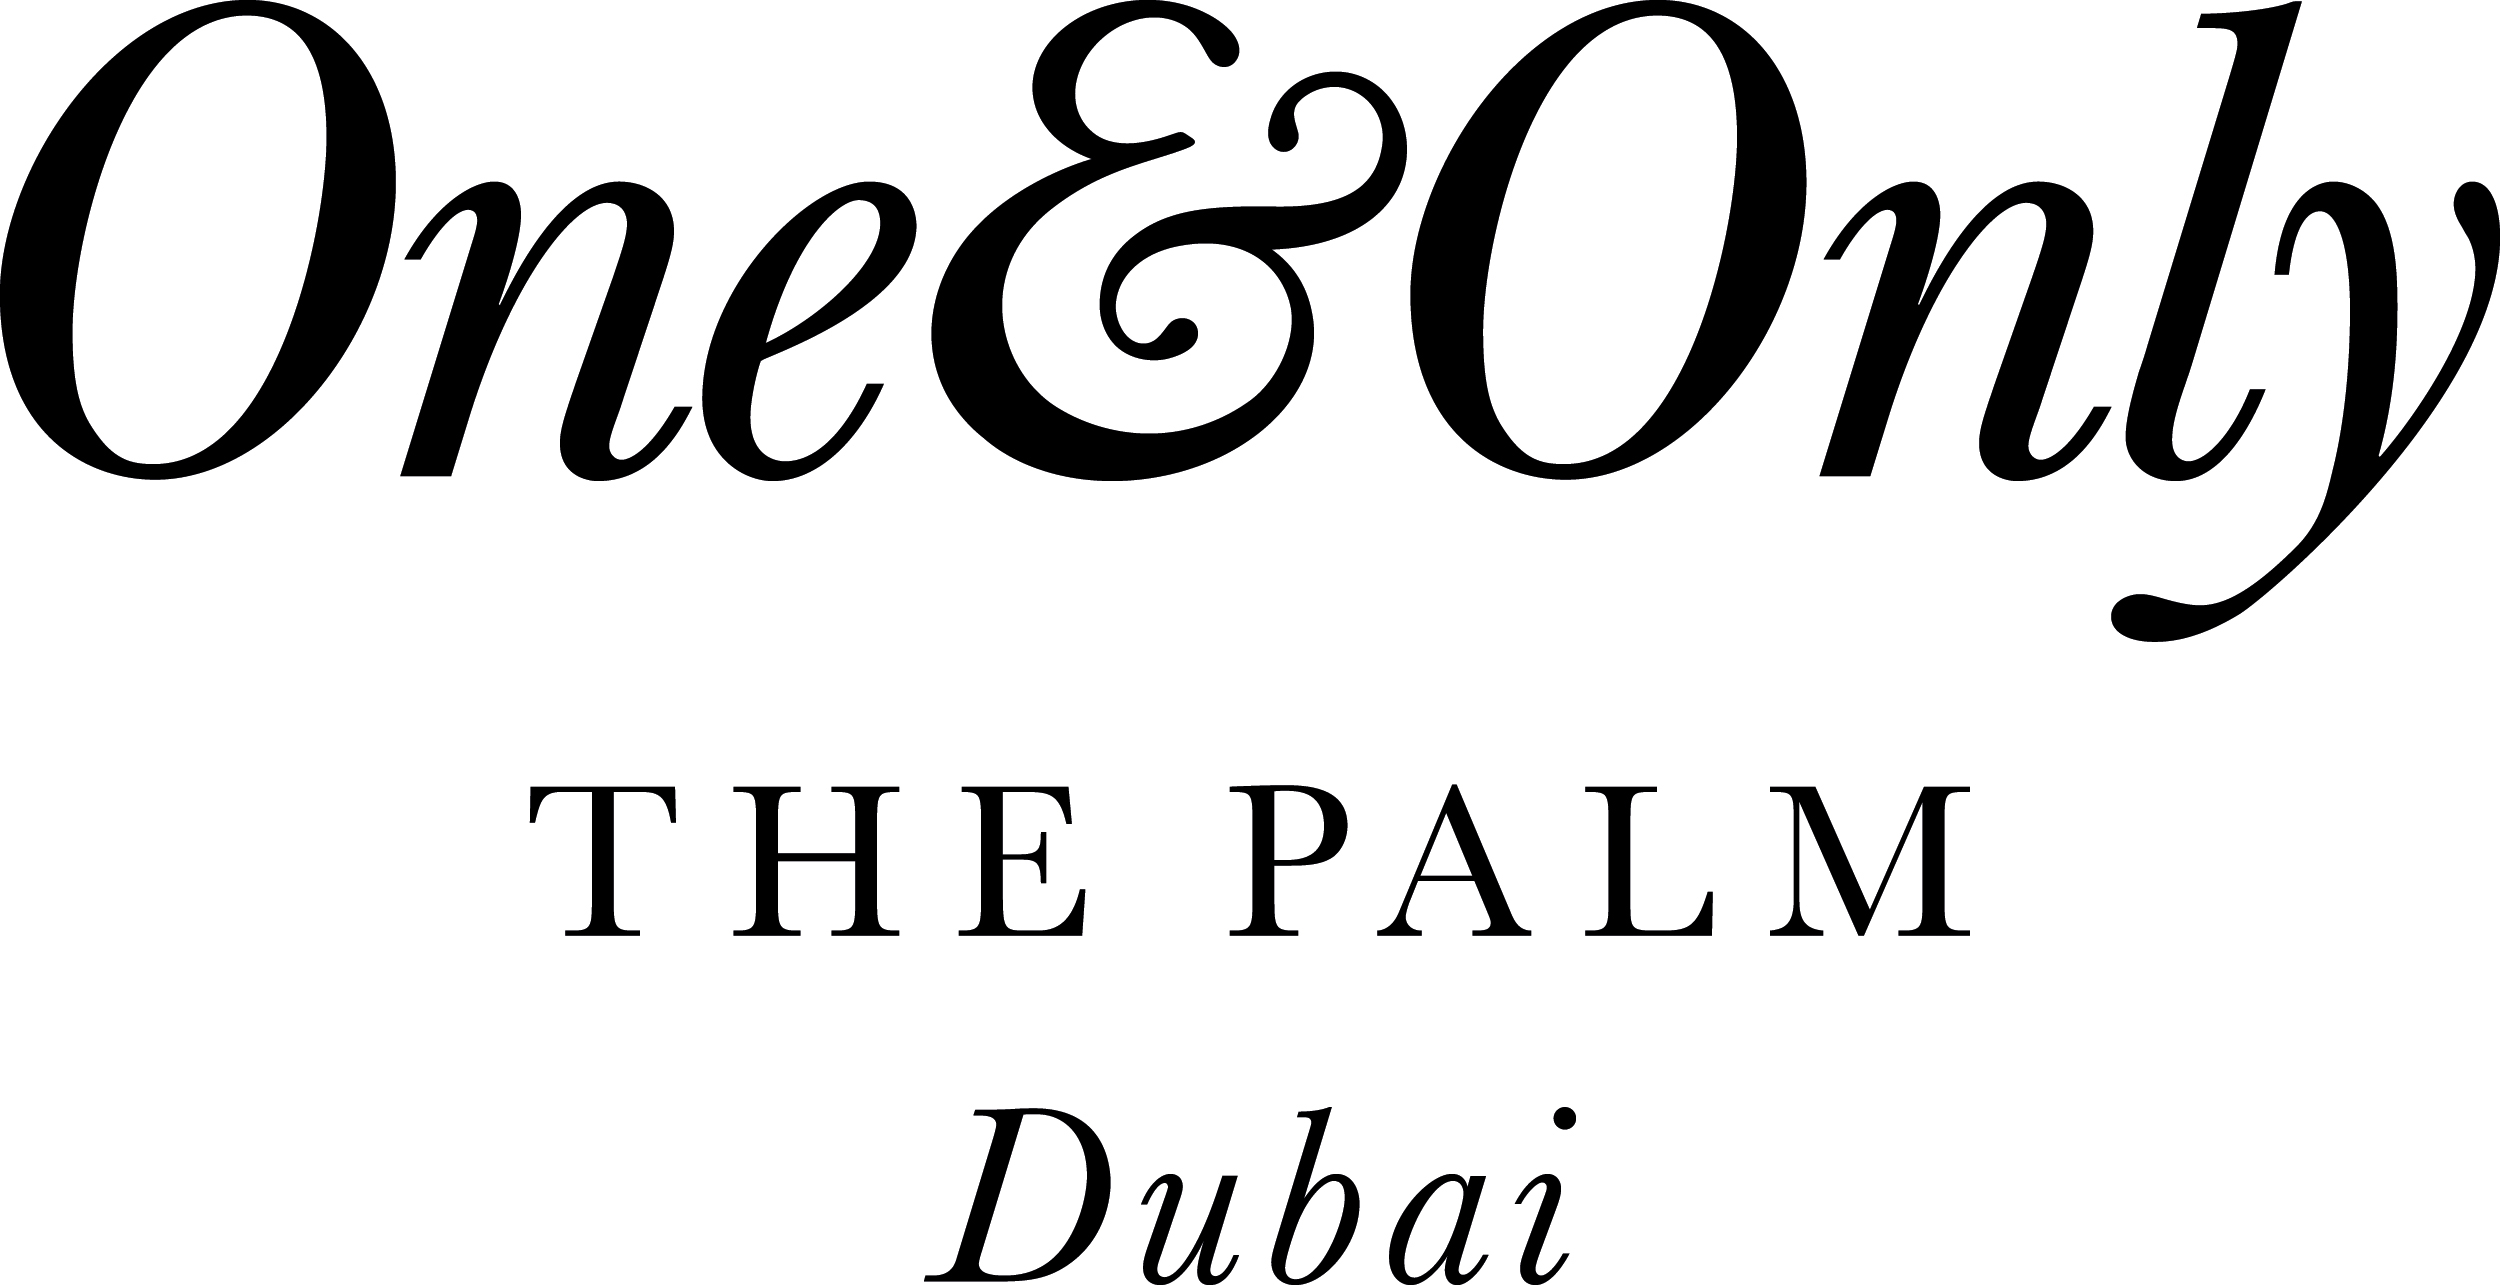 One&Only The Palm Dubai logo